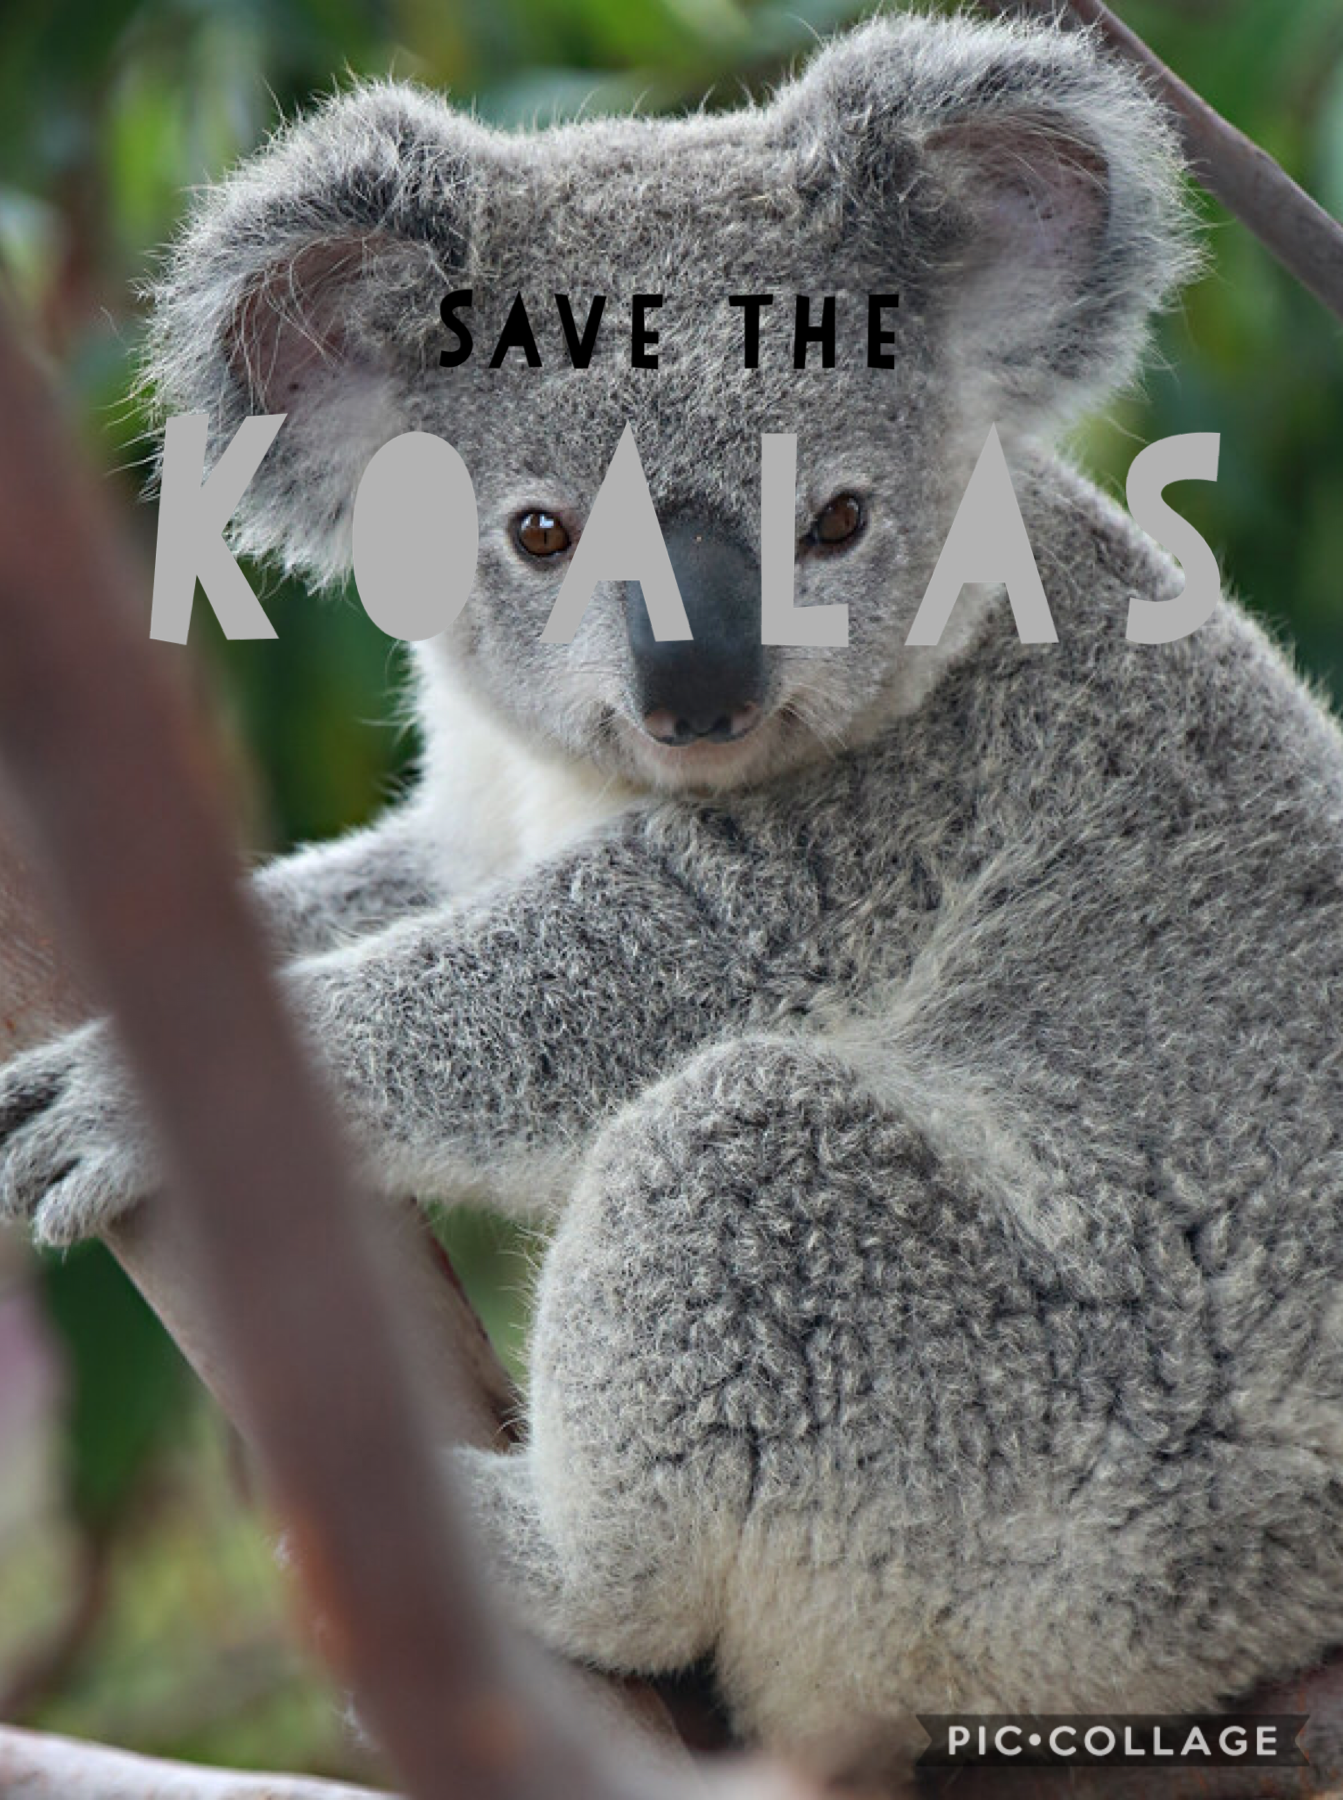 Save the koalas 🐨 